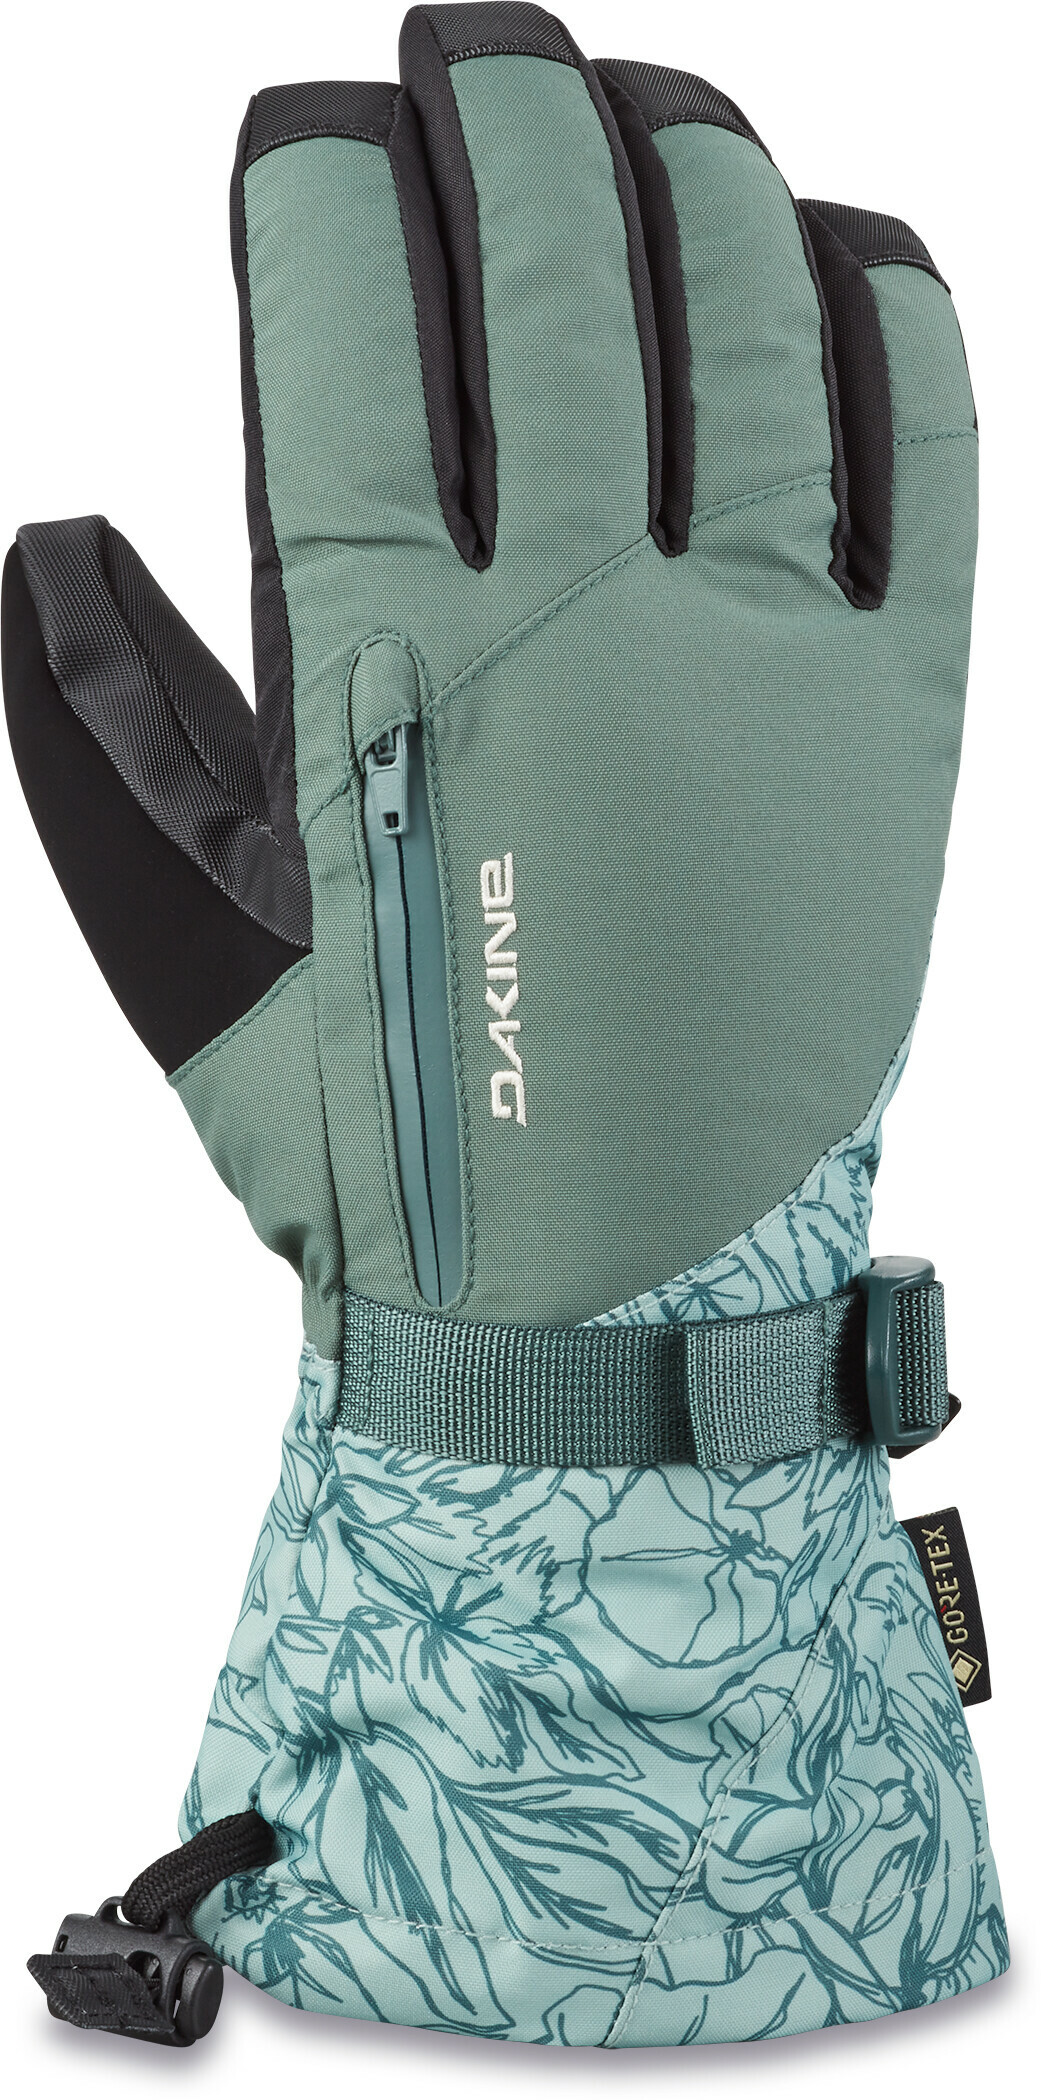 Sequoia GORE-TEX Glove - Women's